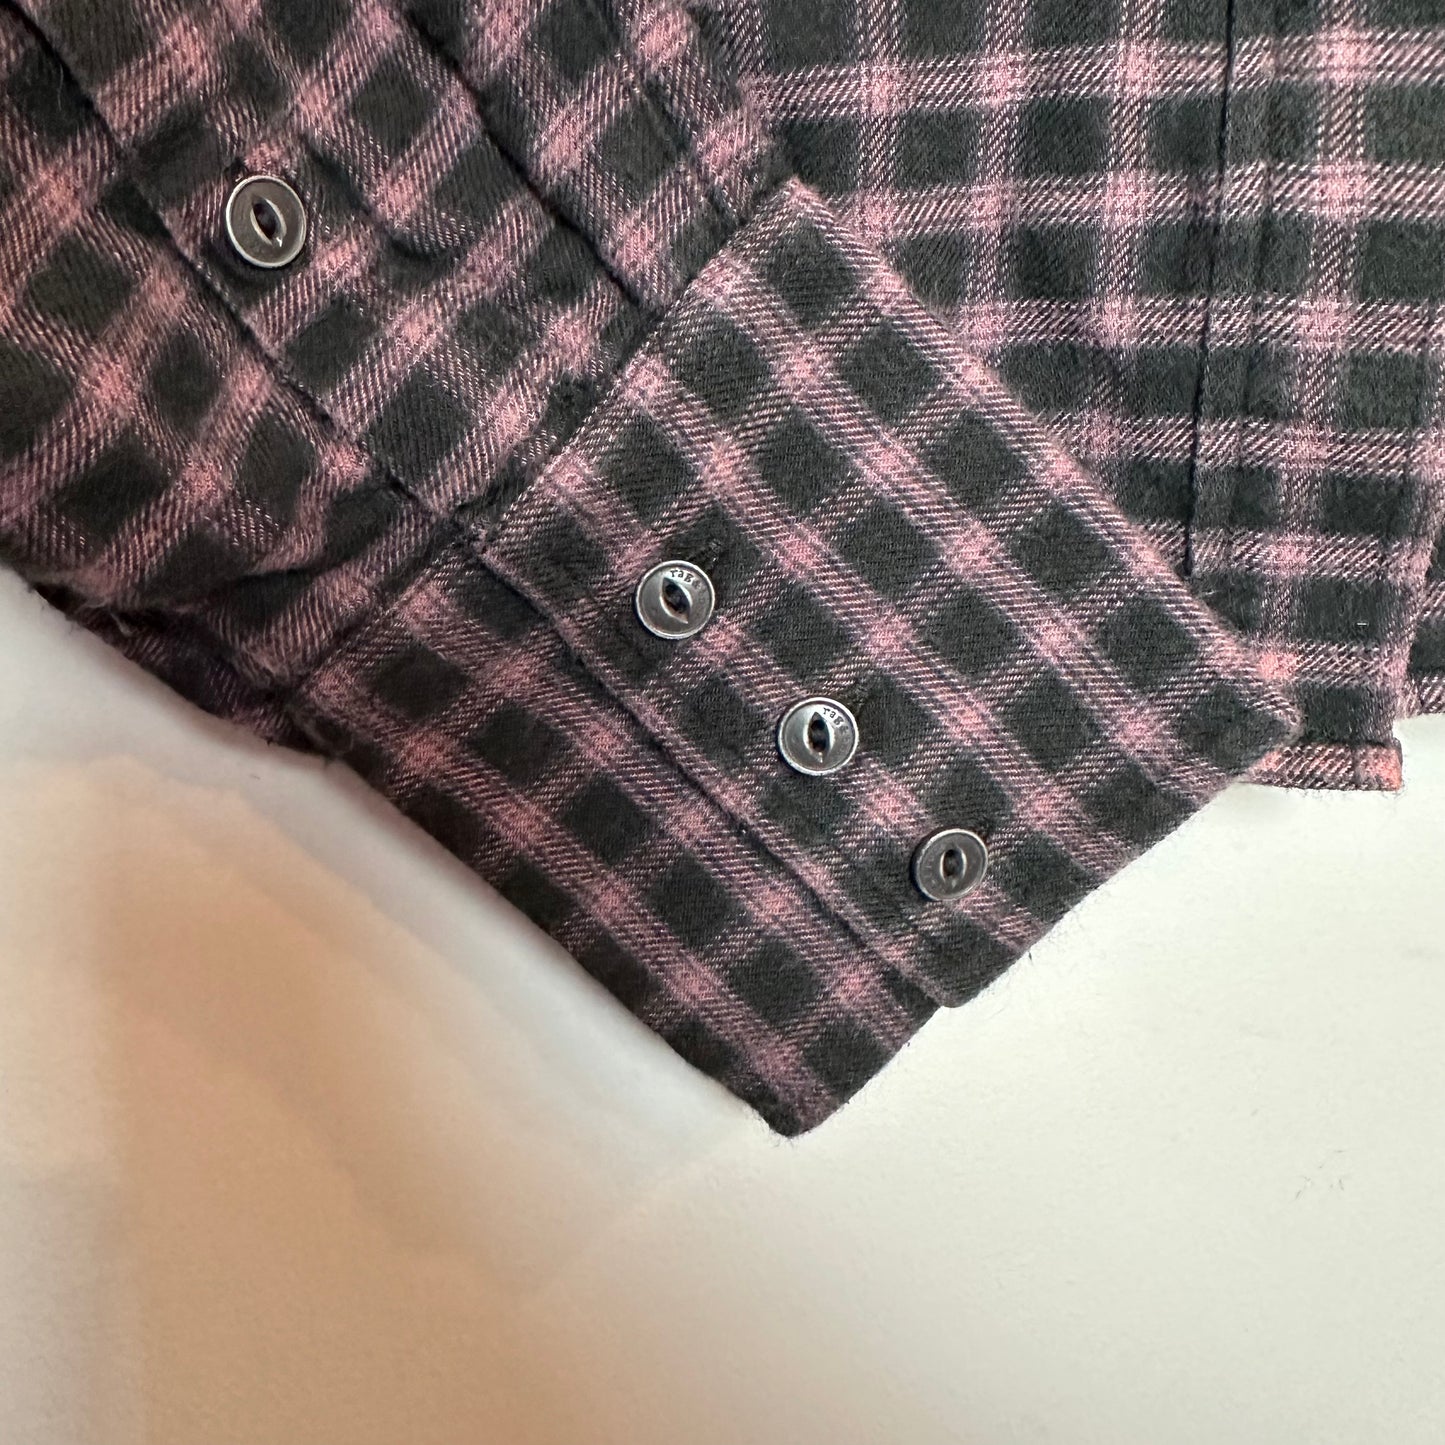 Rag & Bone Iris Plaid Flannel Shirt Black Pink Collared Button Up XS